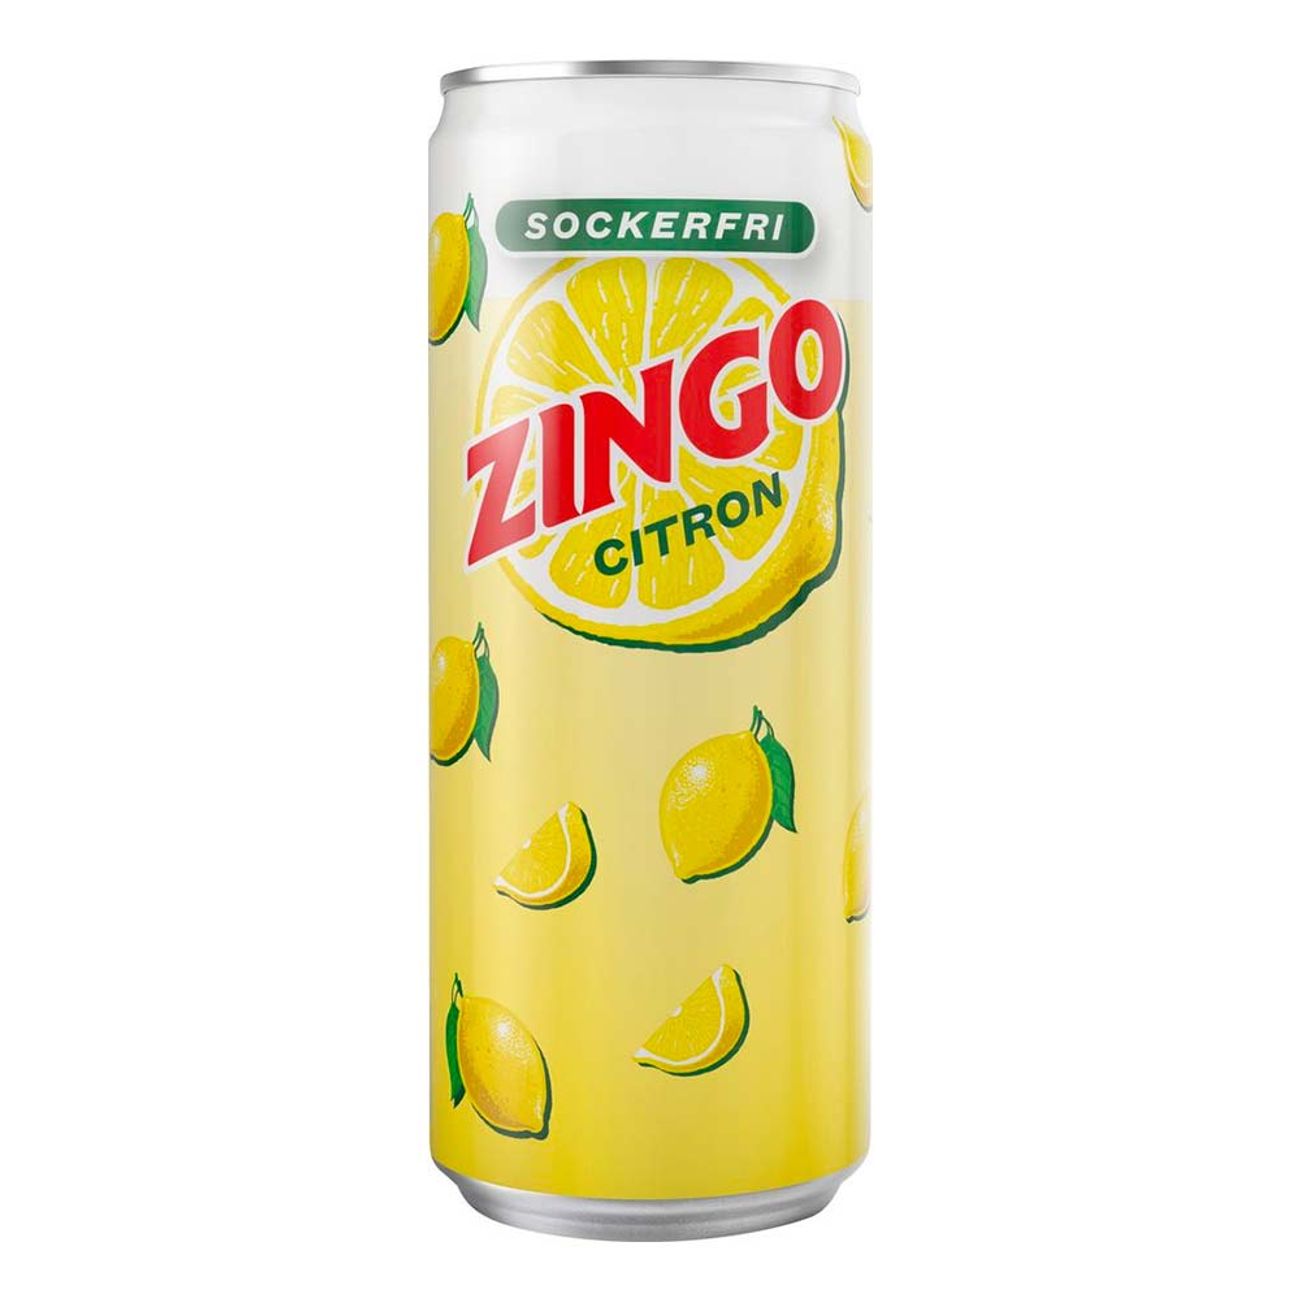 zingo-citron-sockerfri-94863-1